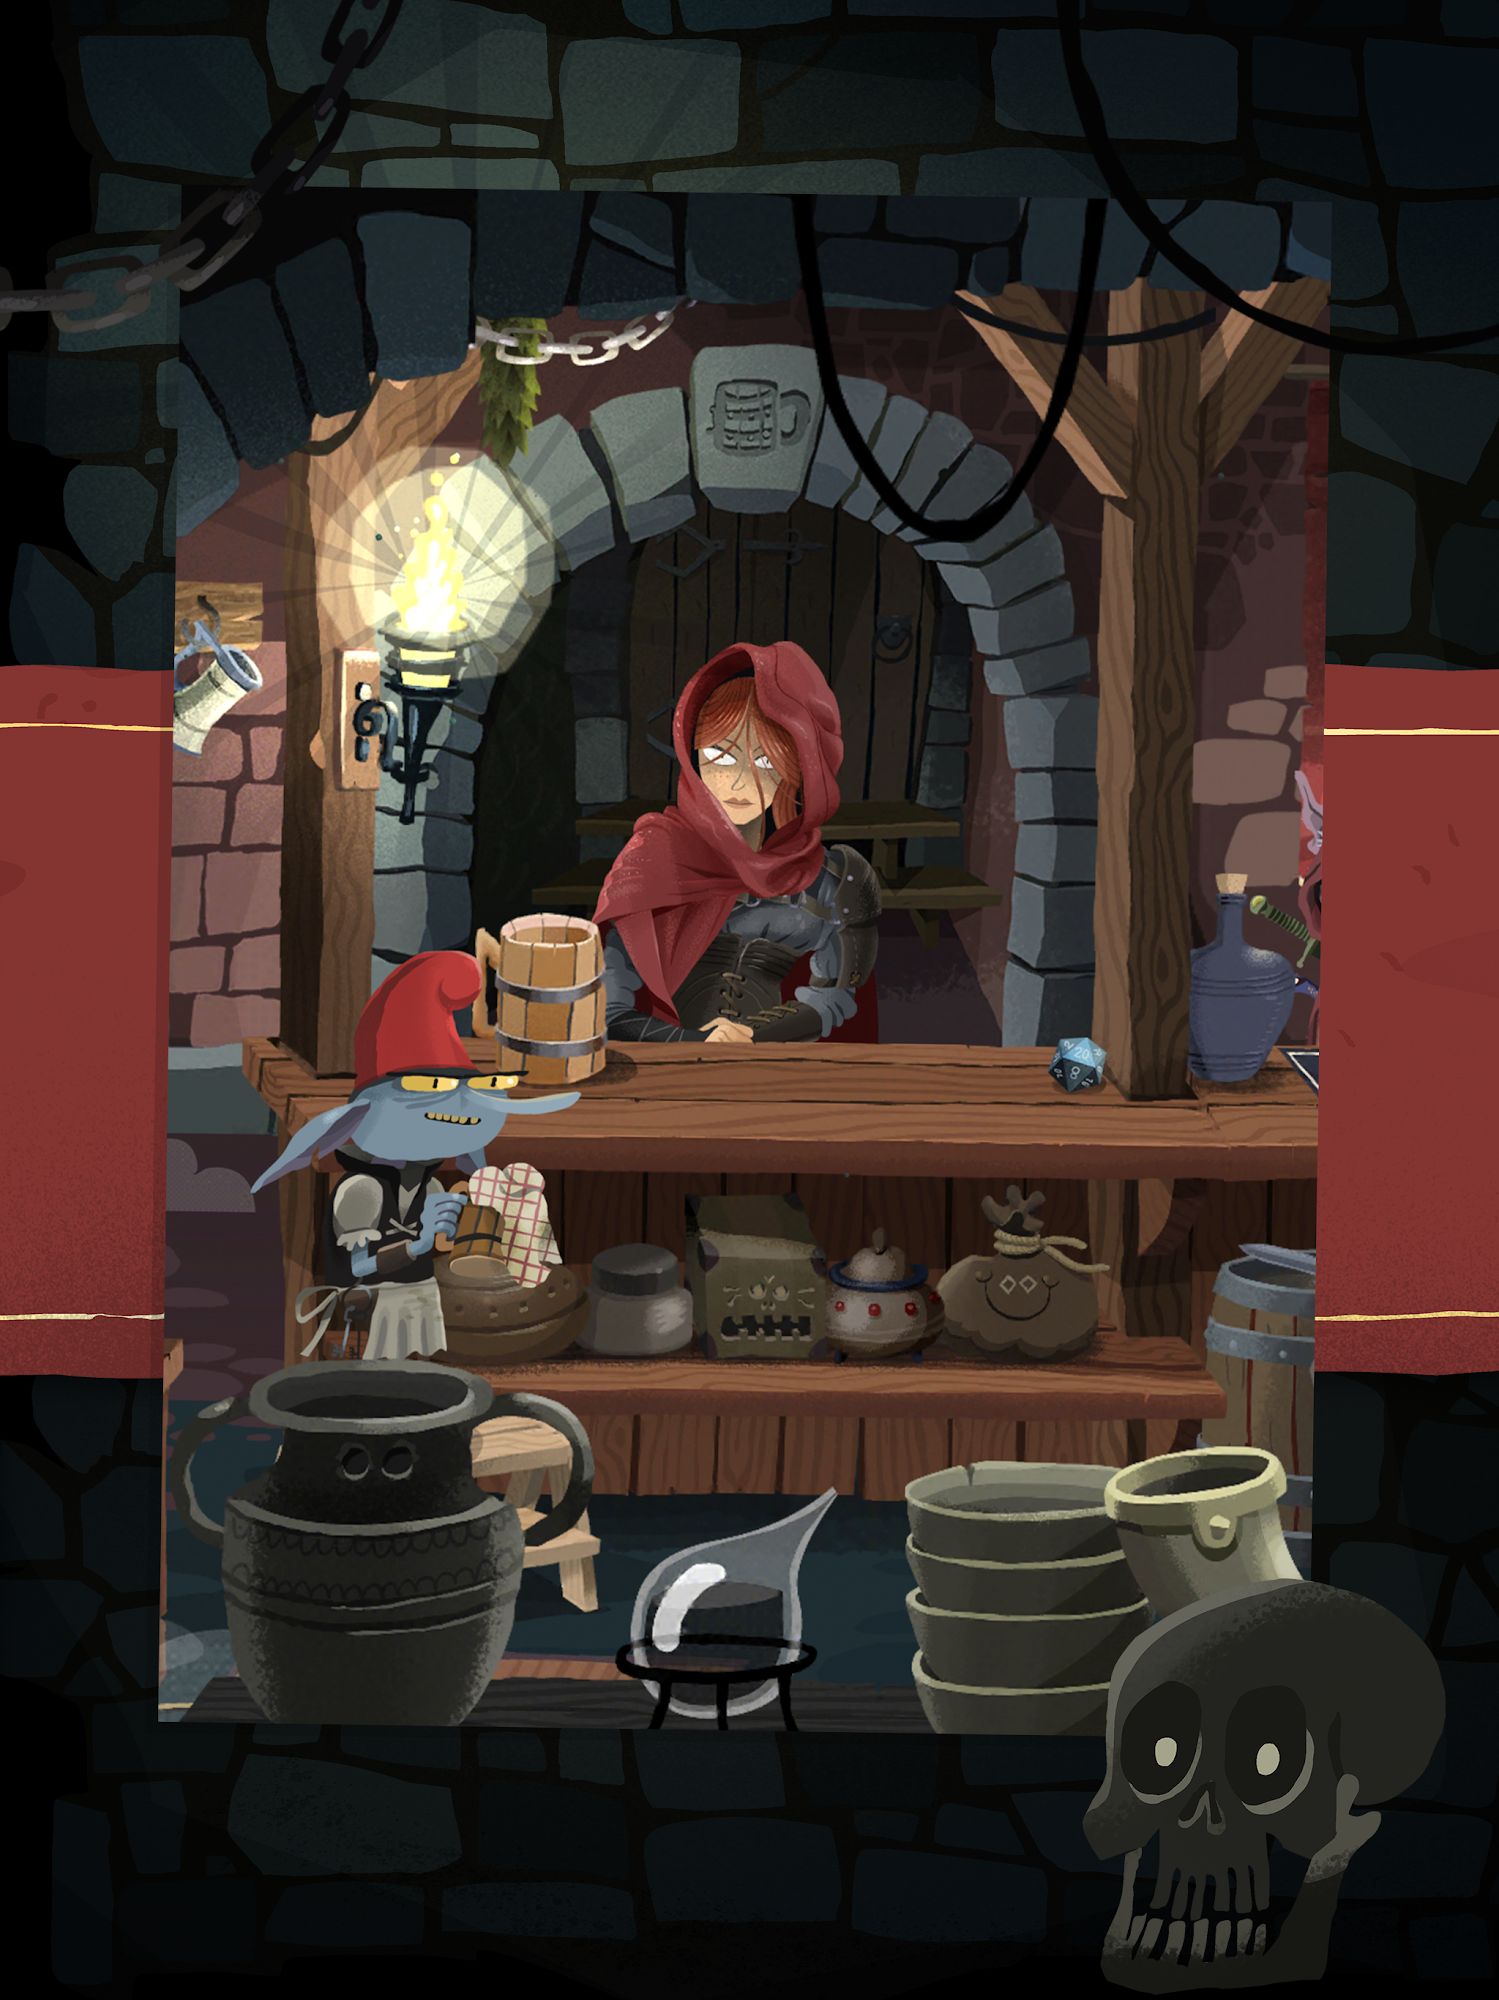 Card Crawl Adventure - Android game screenshots.